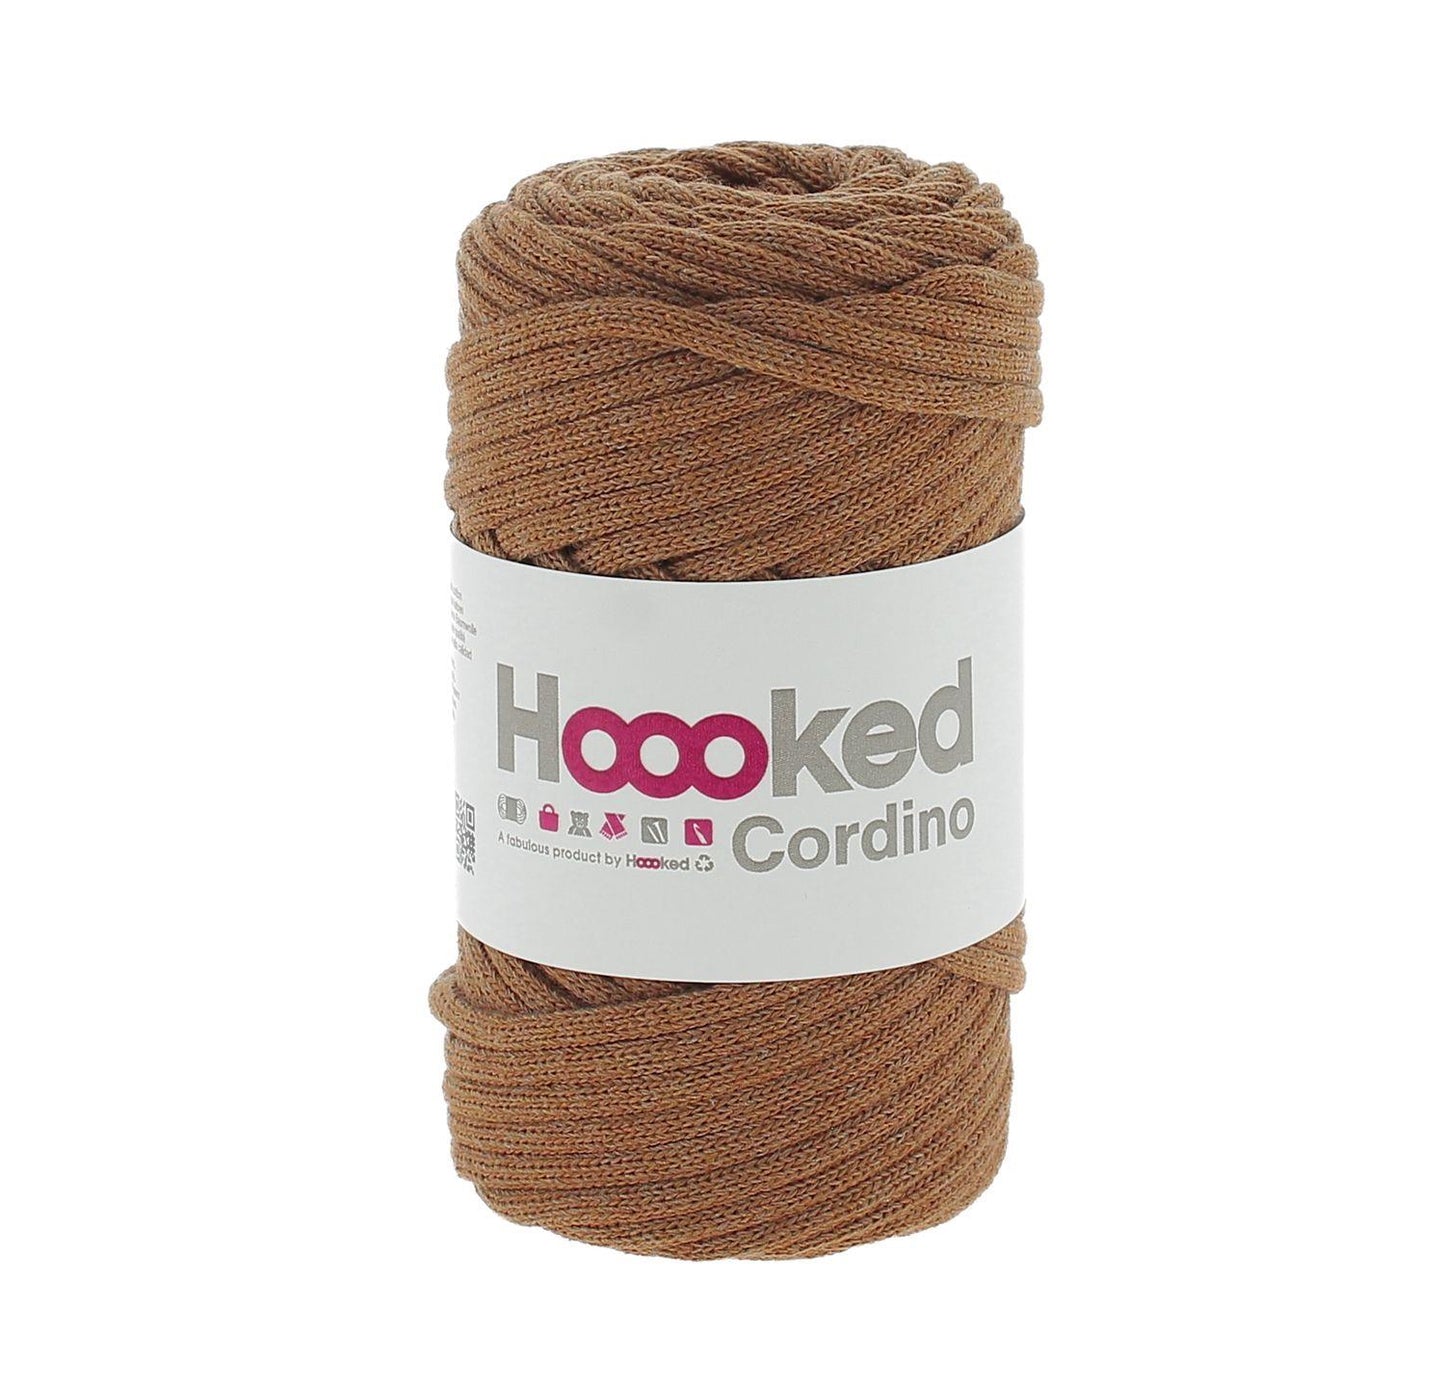 [Hoooked] Cordino Caramel Brown Cotton Macrame Cord - 54M, 150g